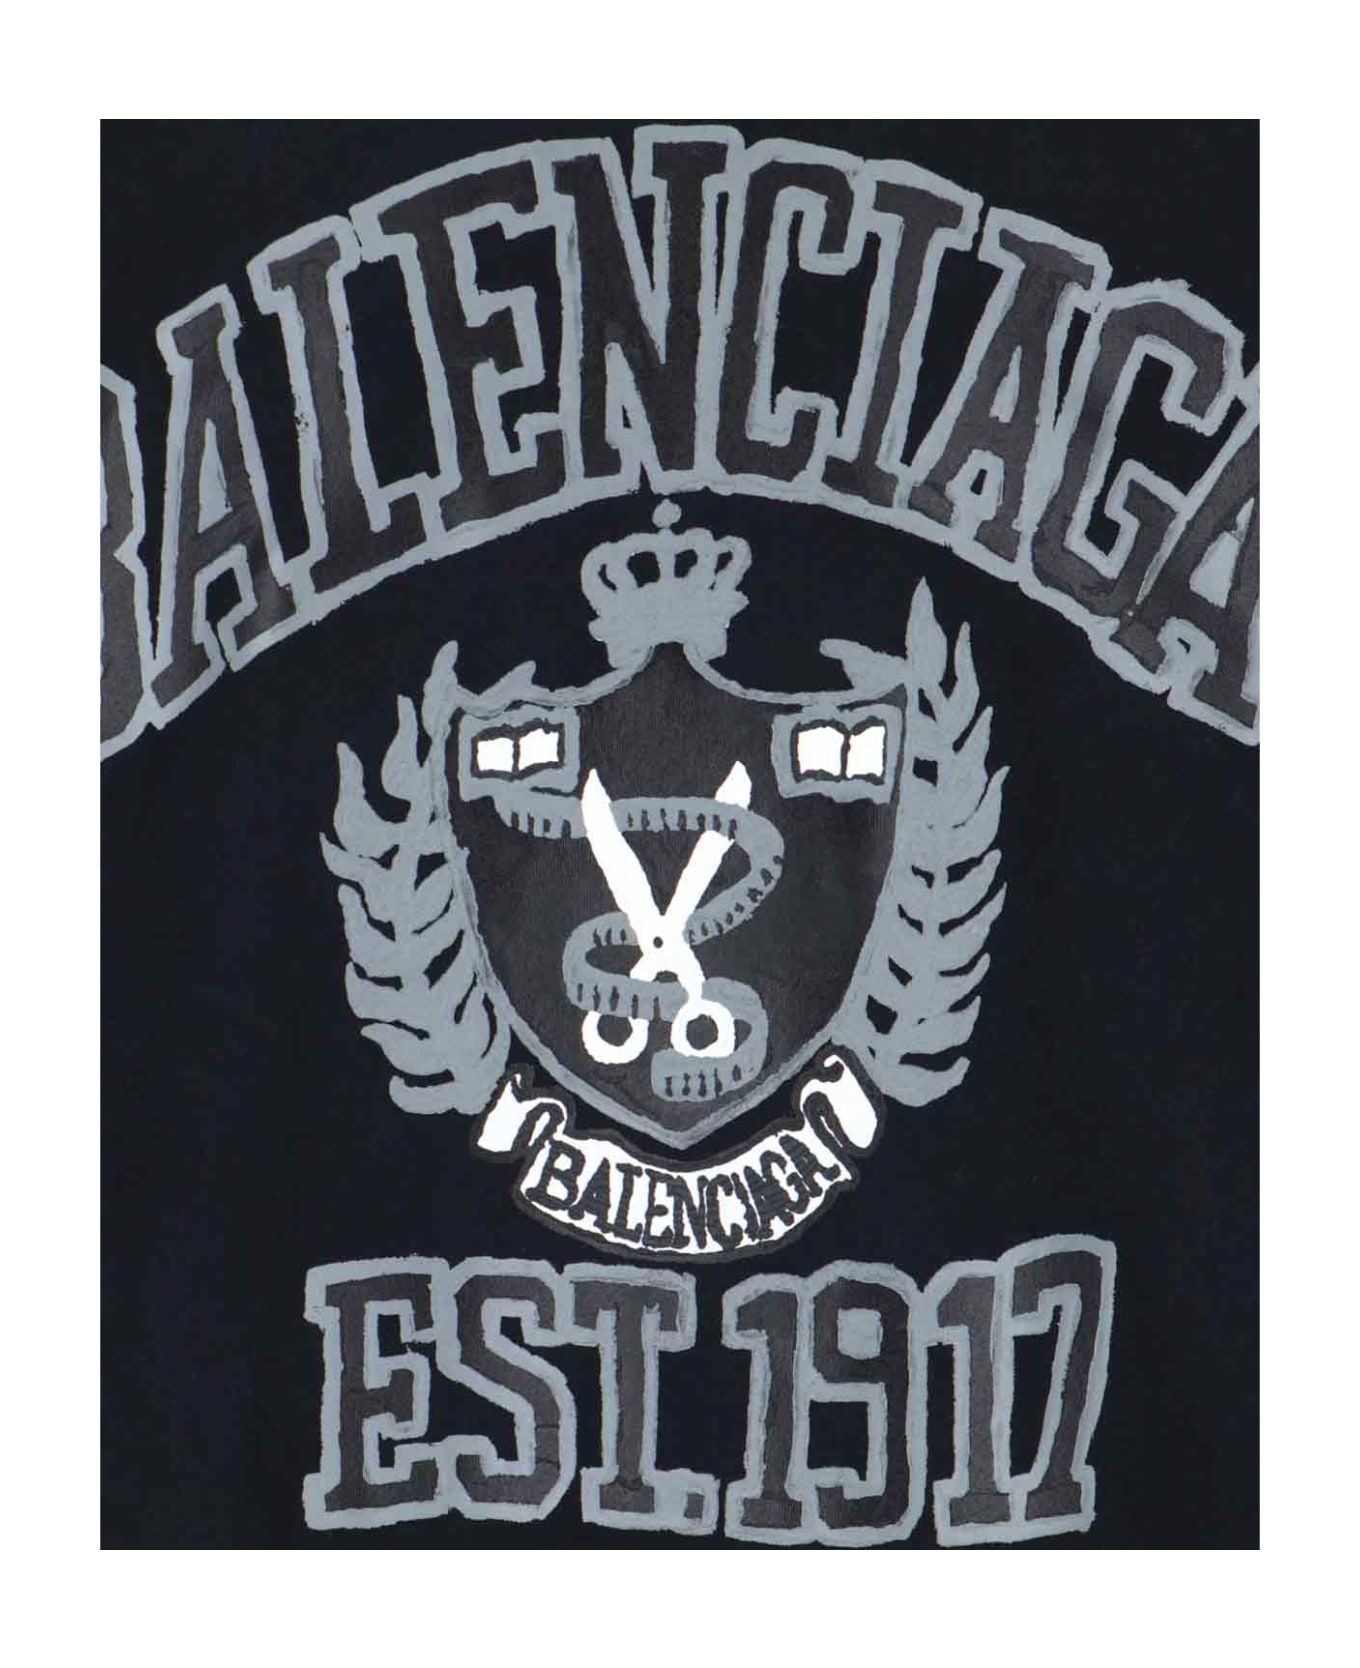 Balenciaga Logo T-shirt - Black  